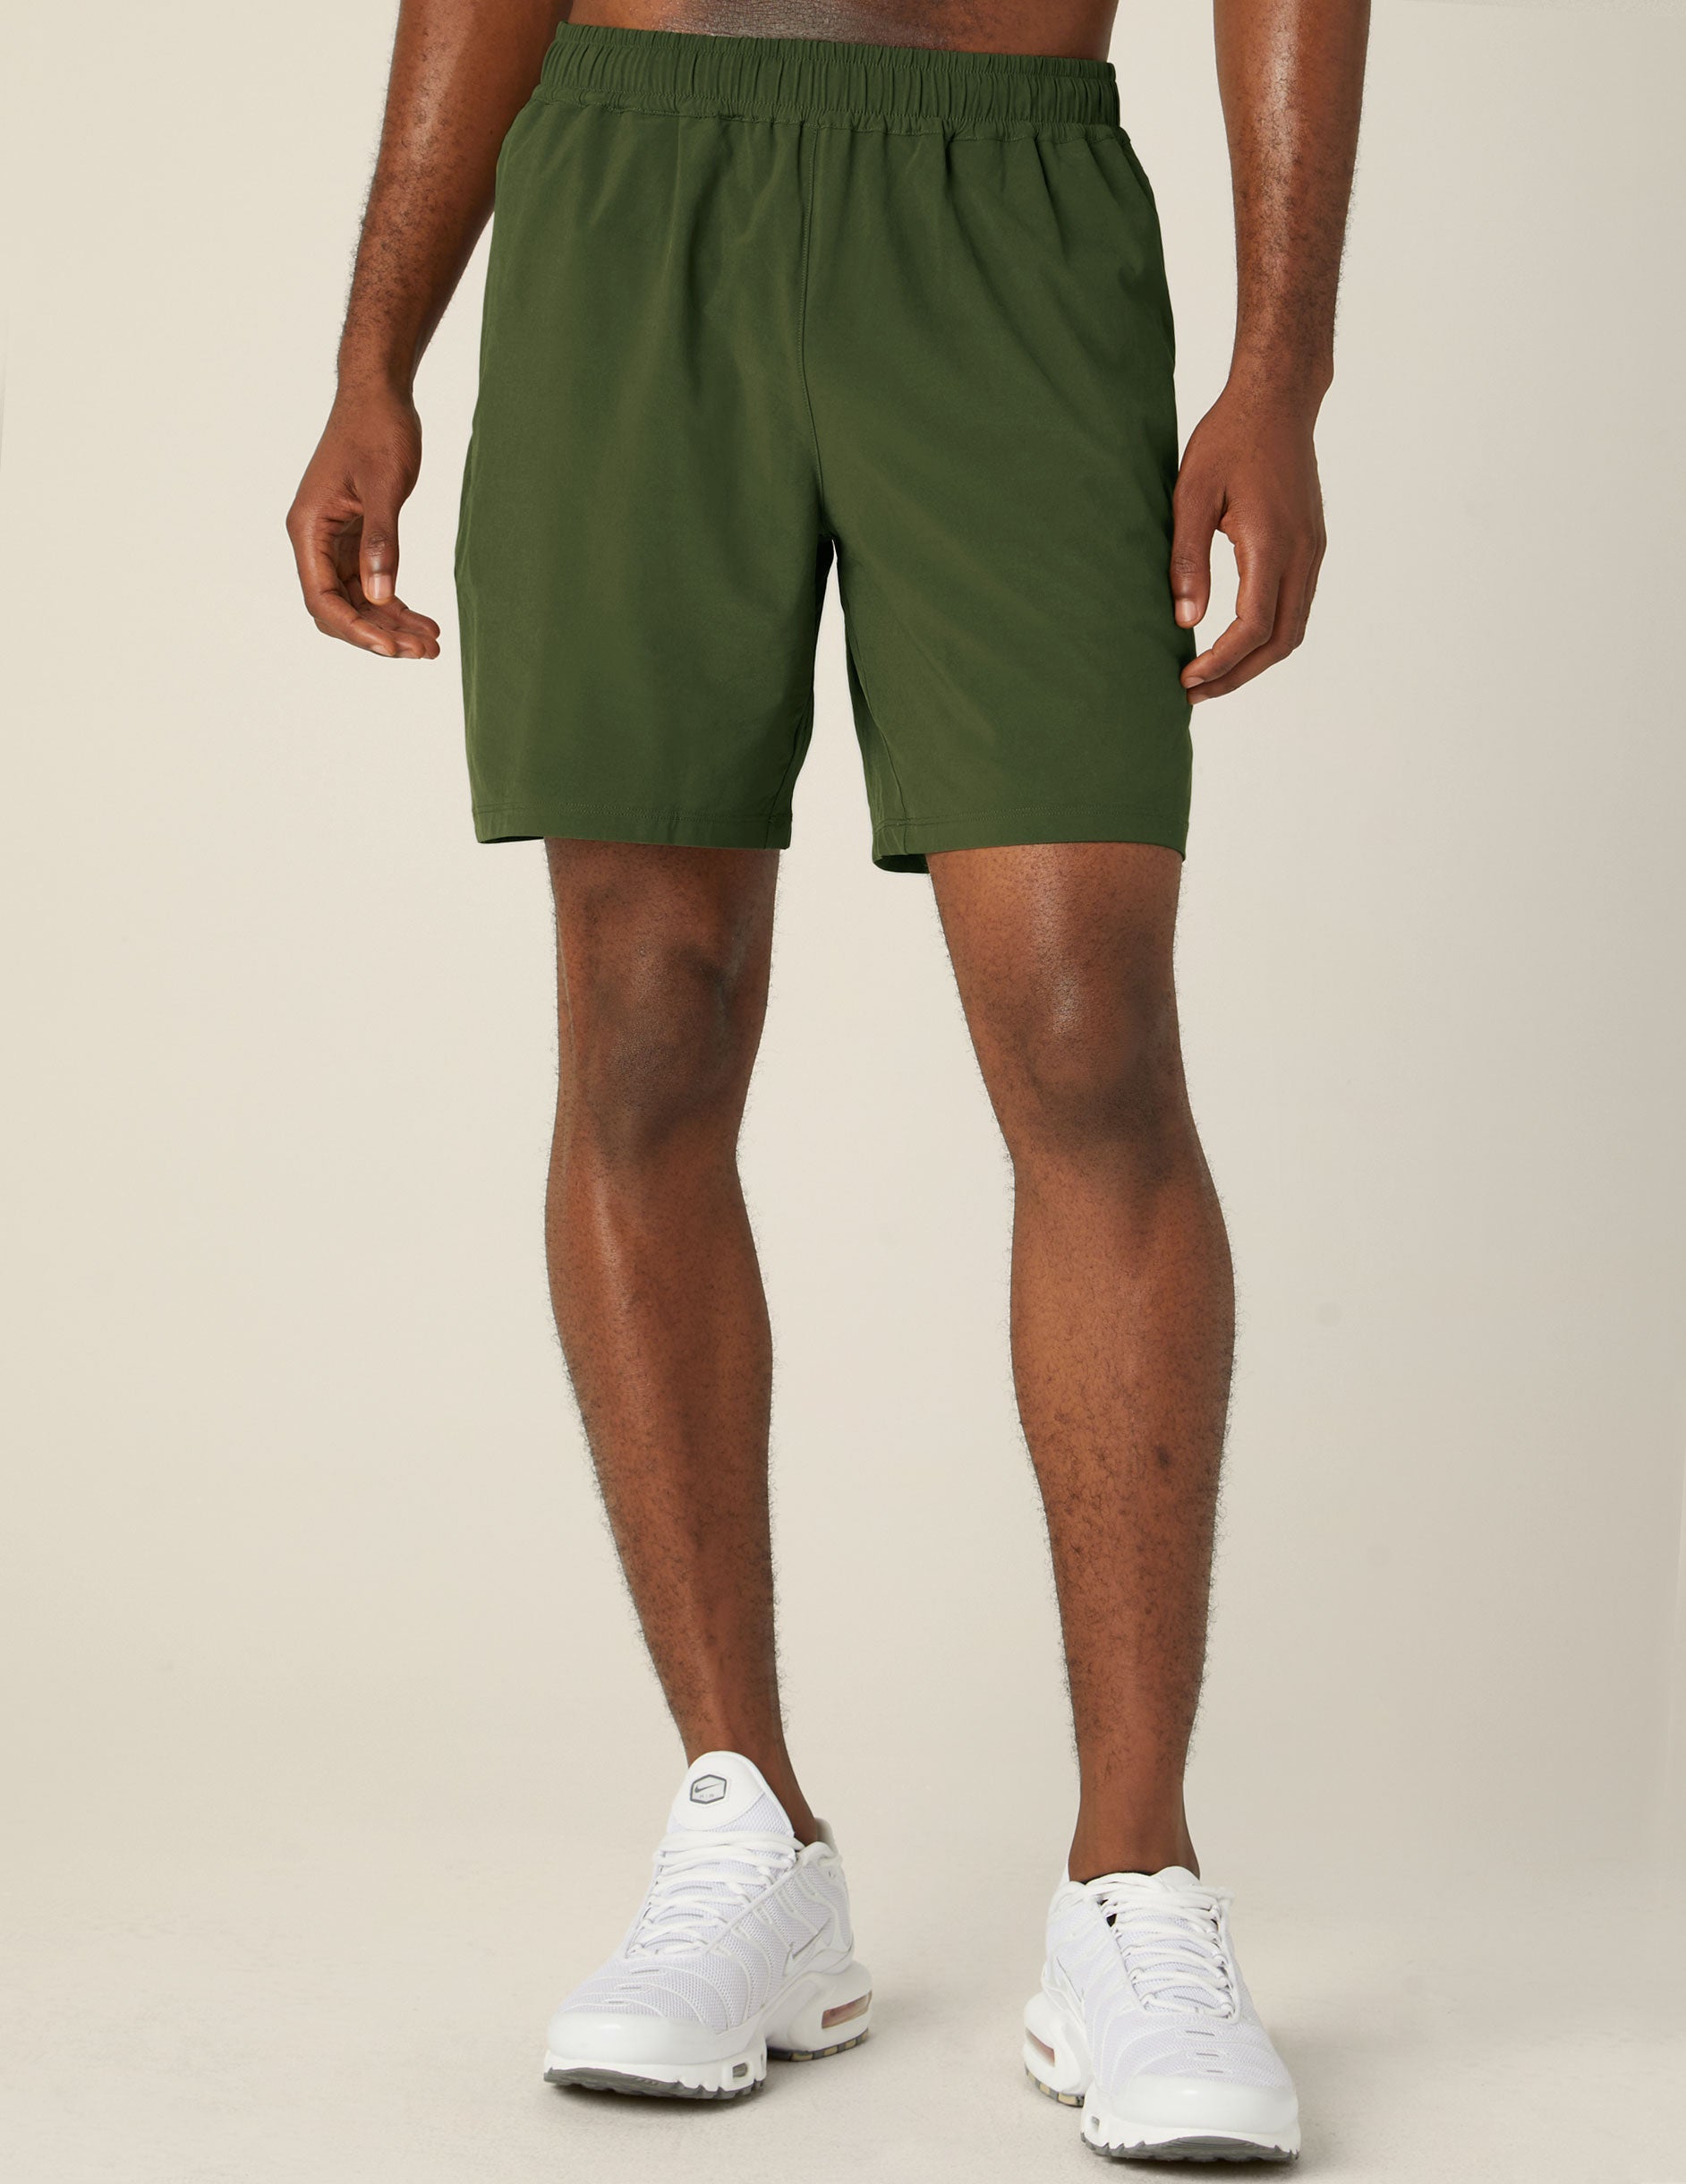 green mens shorts with back pockets.